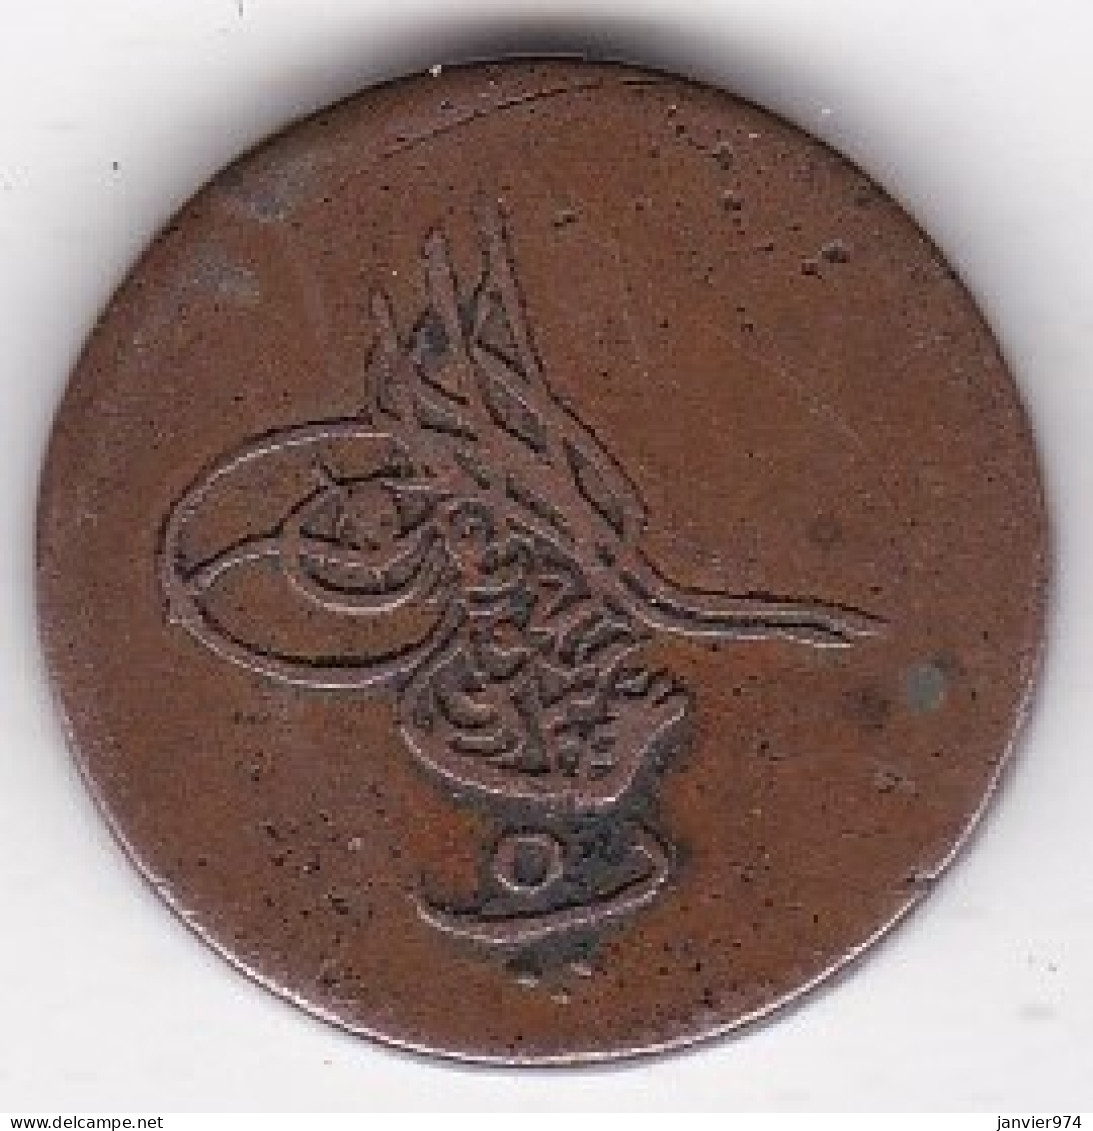 Egypte 5 Para AH 1255 – 1839 Year 1, Abdul Mejid , En Cuivre , KM# 222 - Egypt